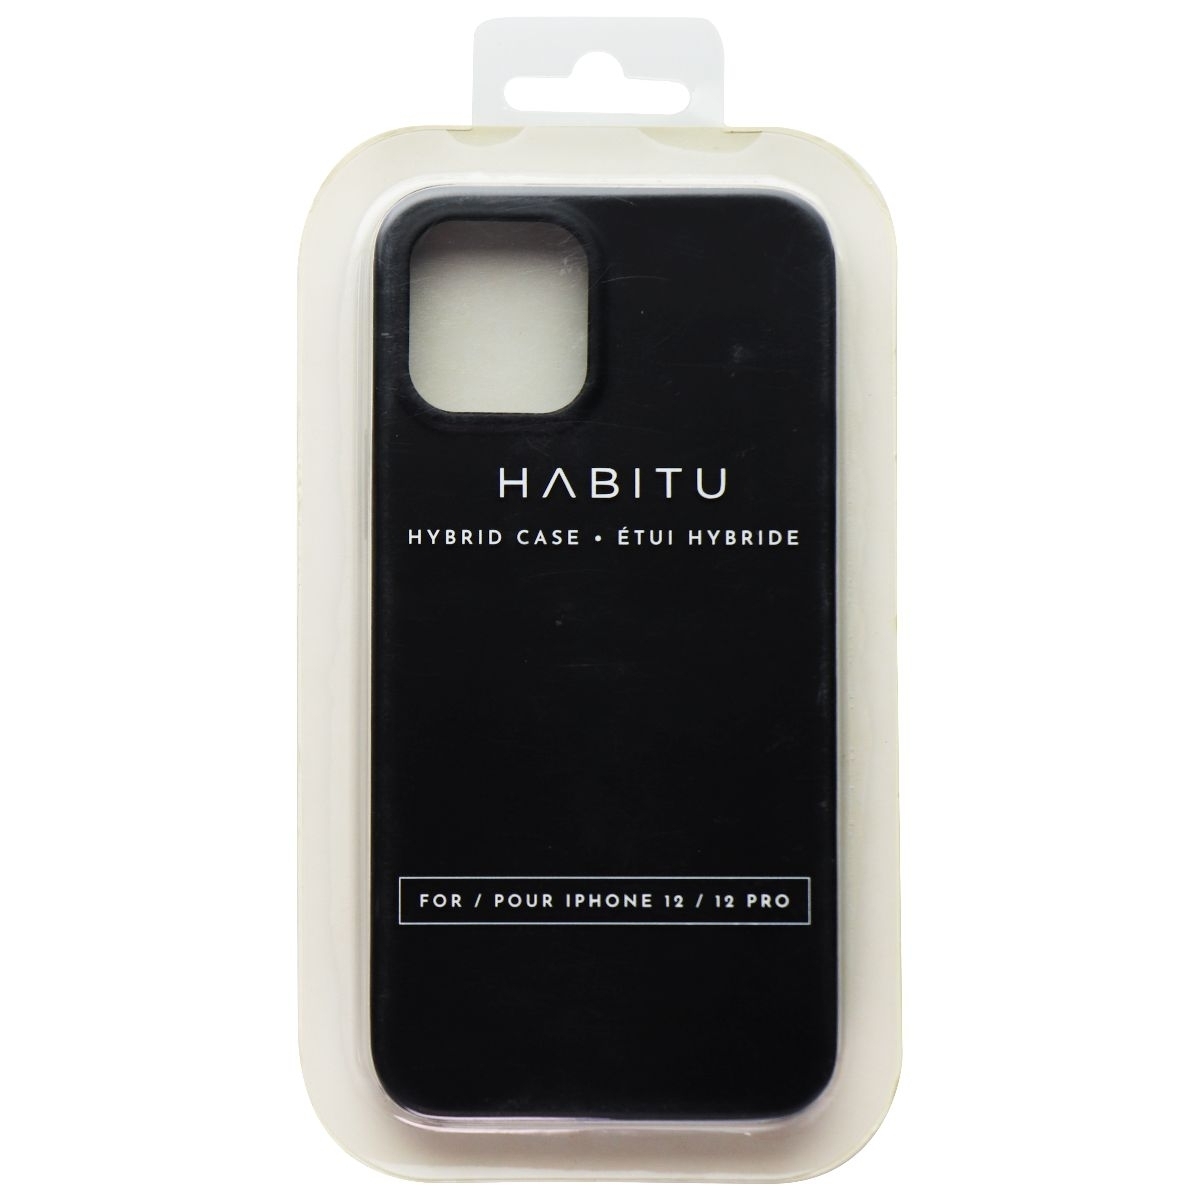 Habitu Hybrid Case For Apple IPhone 12 And IPhone 12 Pro - Black (Refurbished)